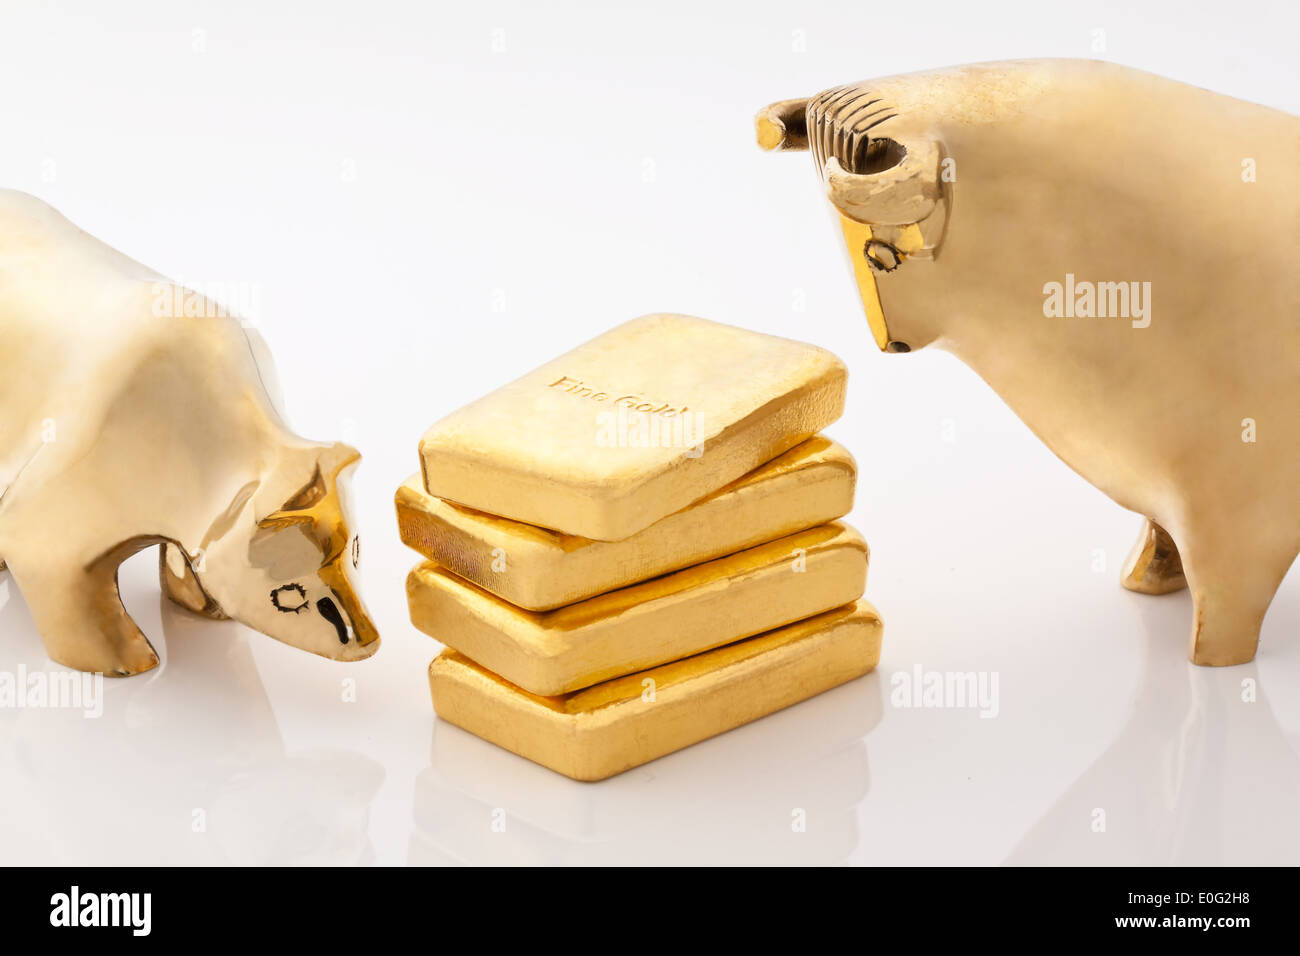 Bull and bear stock exchanges symbols with gold bar, Bulle und Baer Boersen Symbole mit Goldbarren Stock Photo